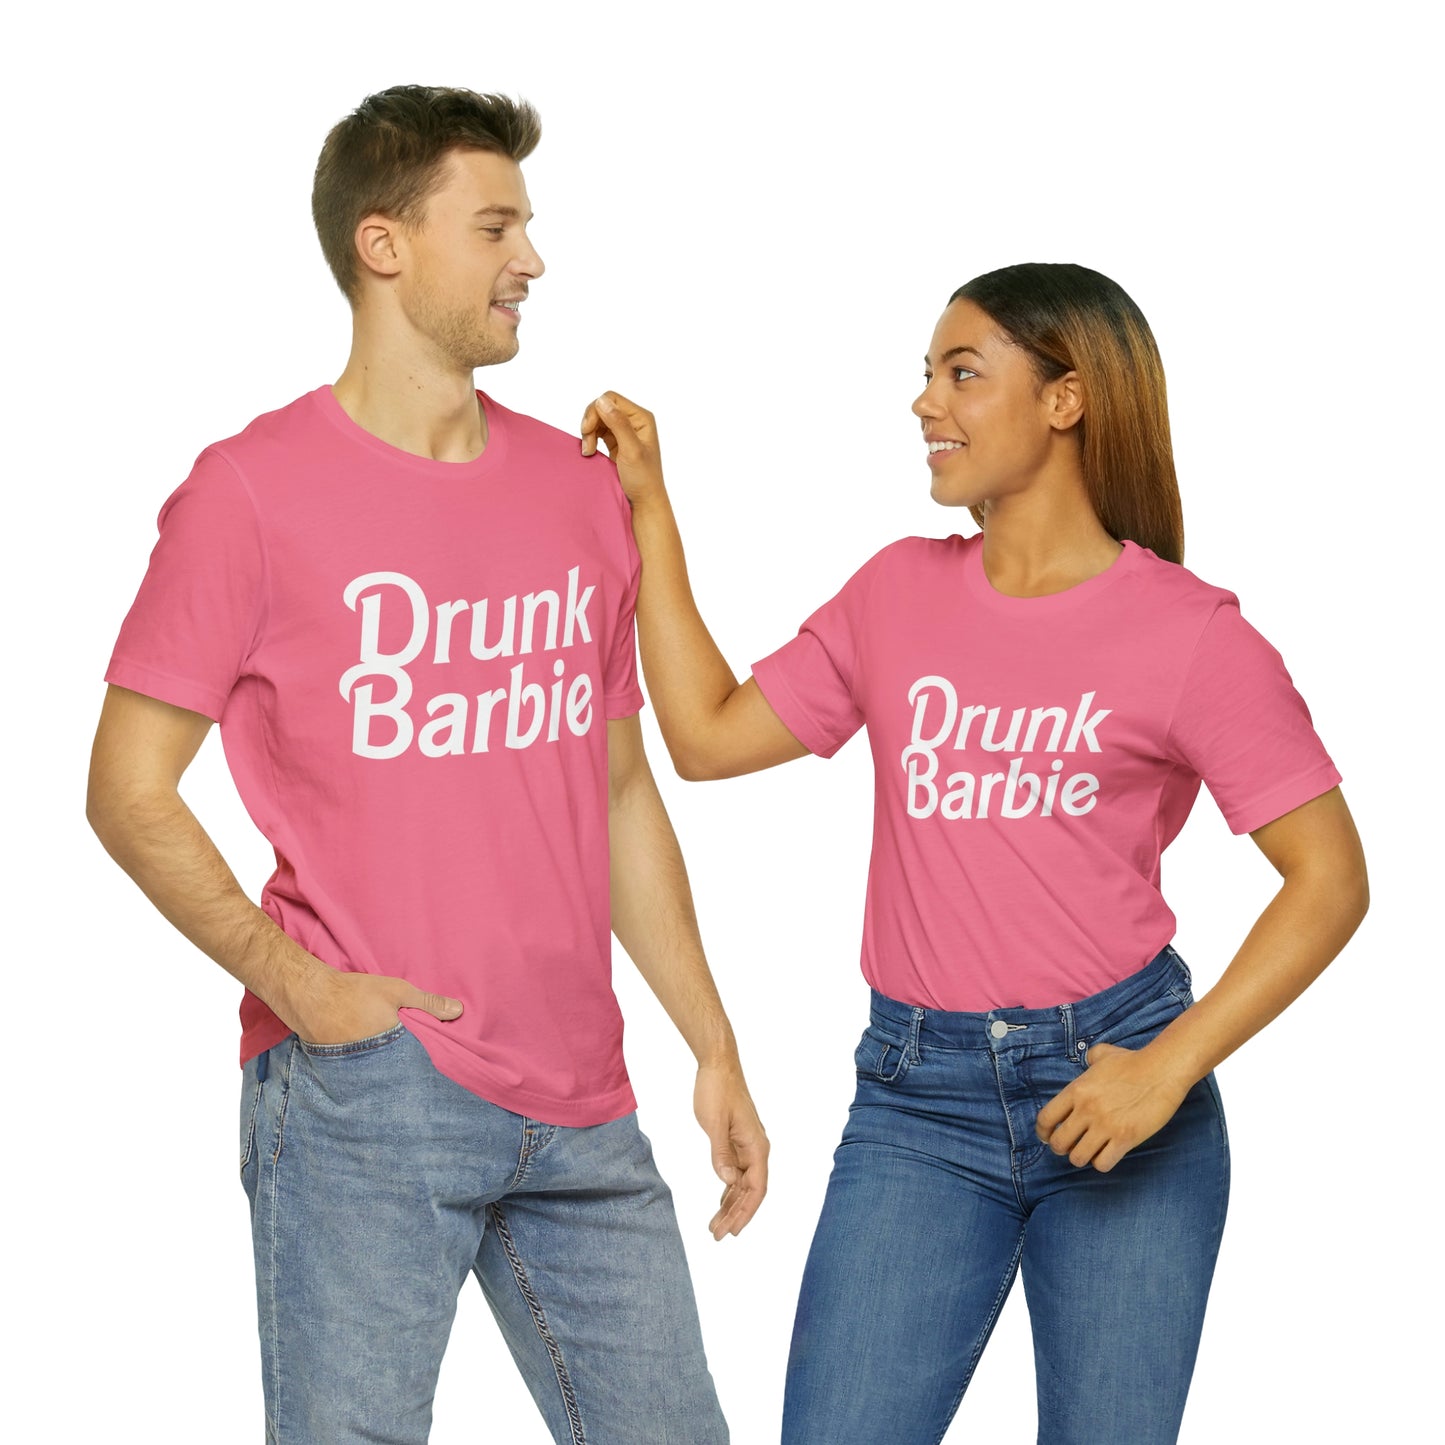 Drunk Barbie